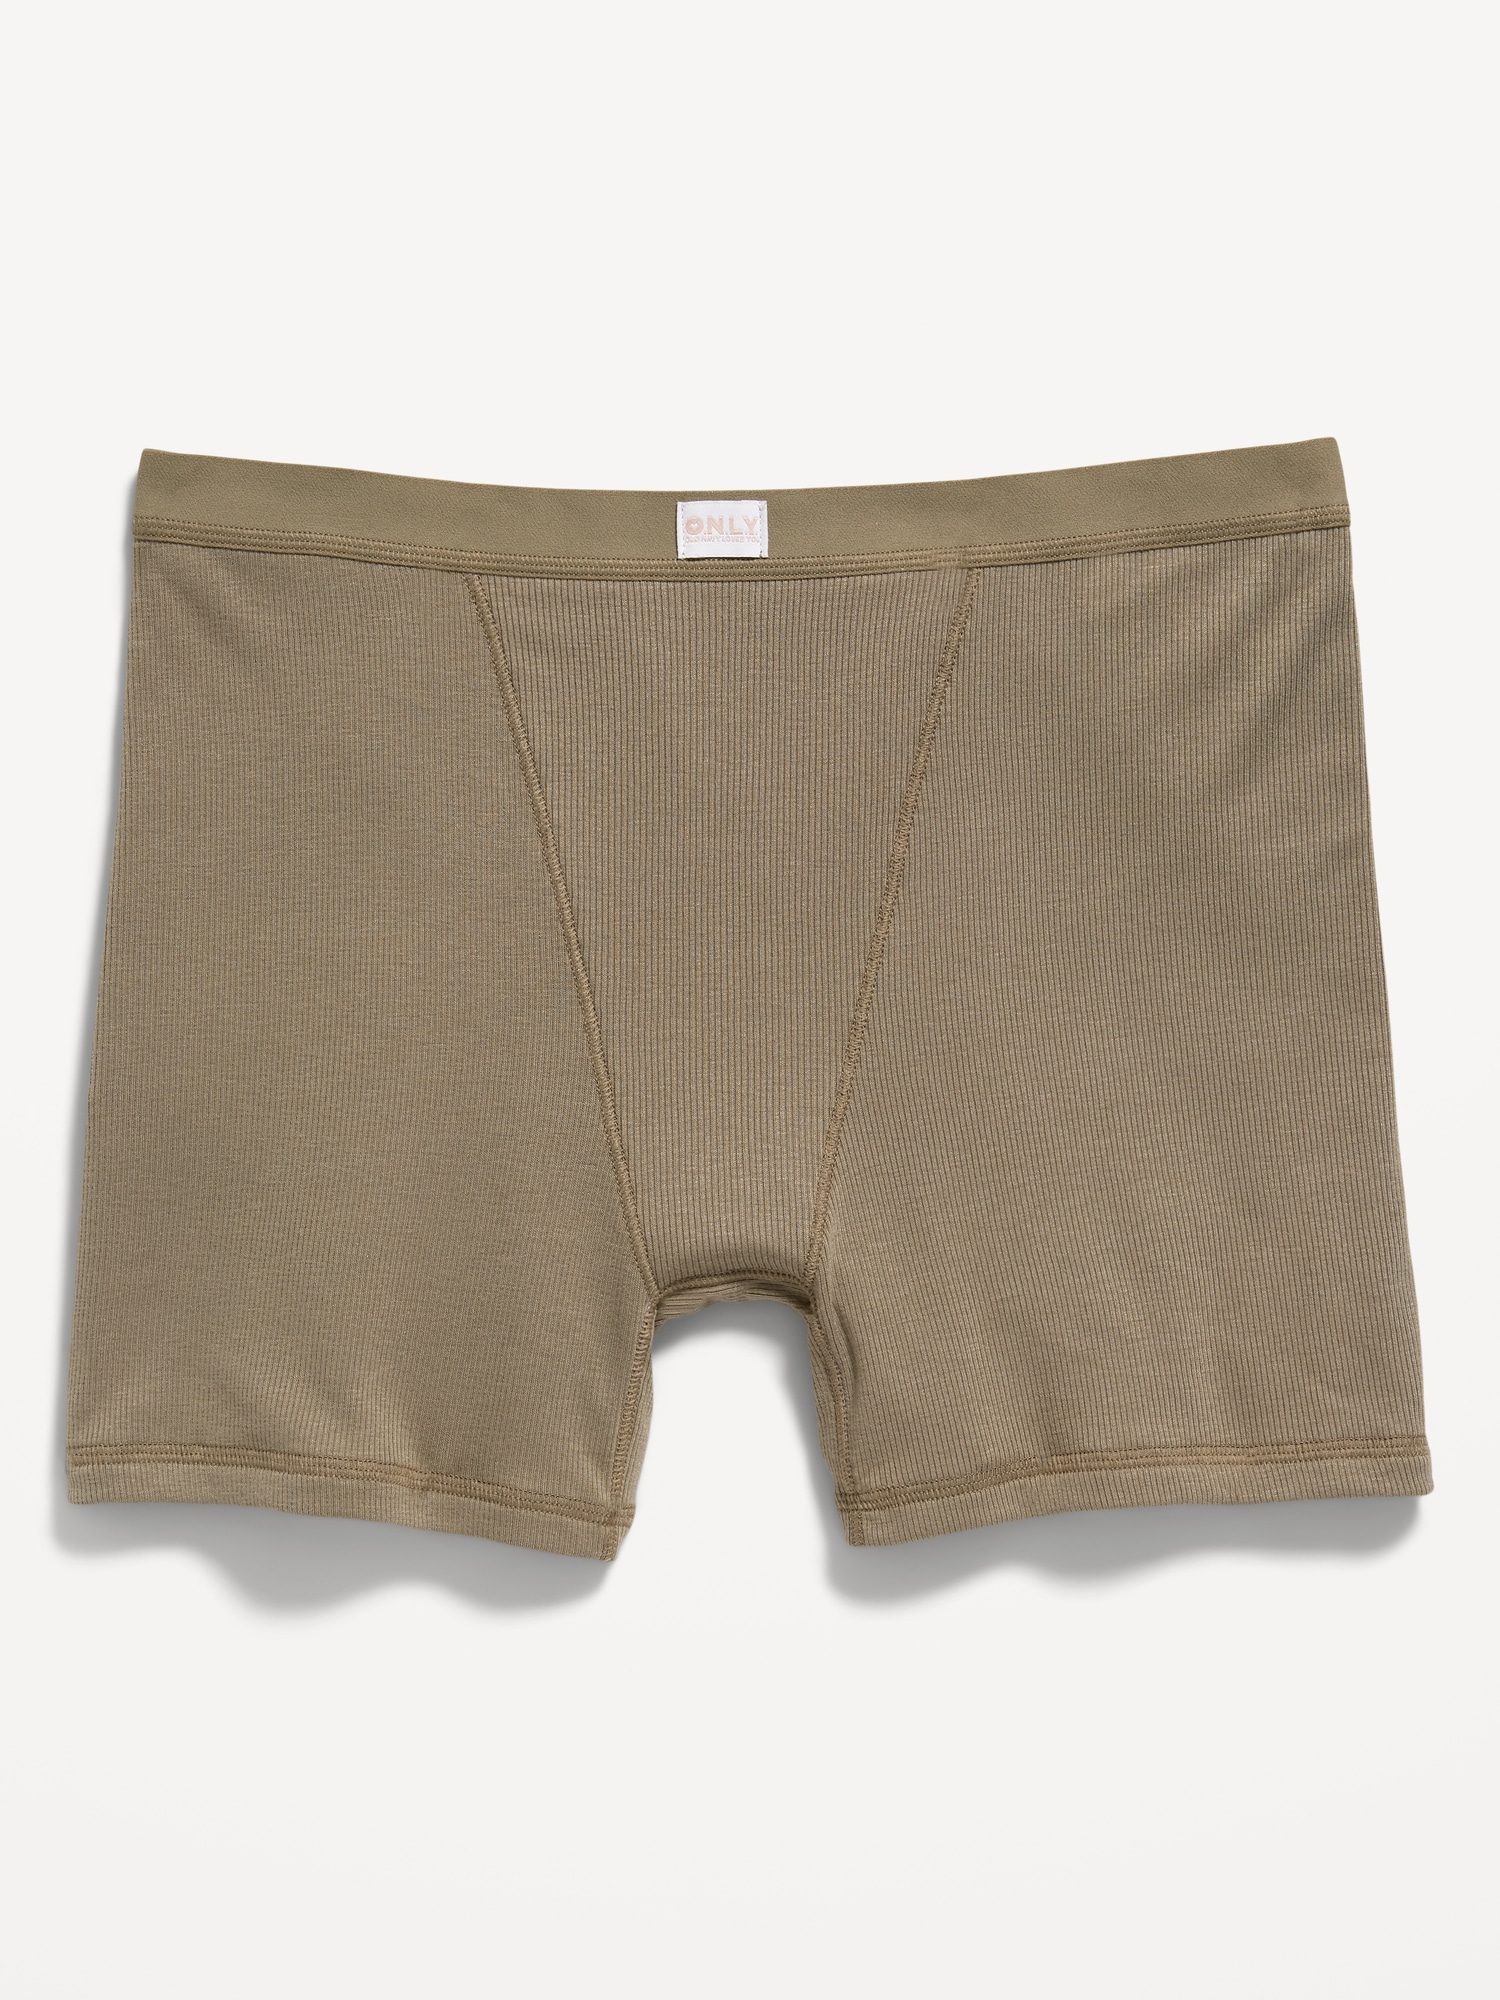 Vintage SPTI Rare 100% Ribbed Cotton Y-Fly Underwear Briefs Size 30 Brown  NEW